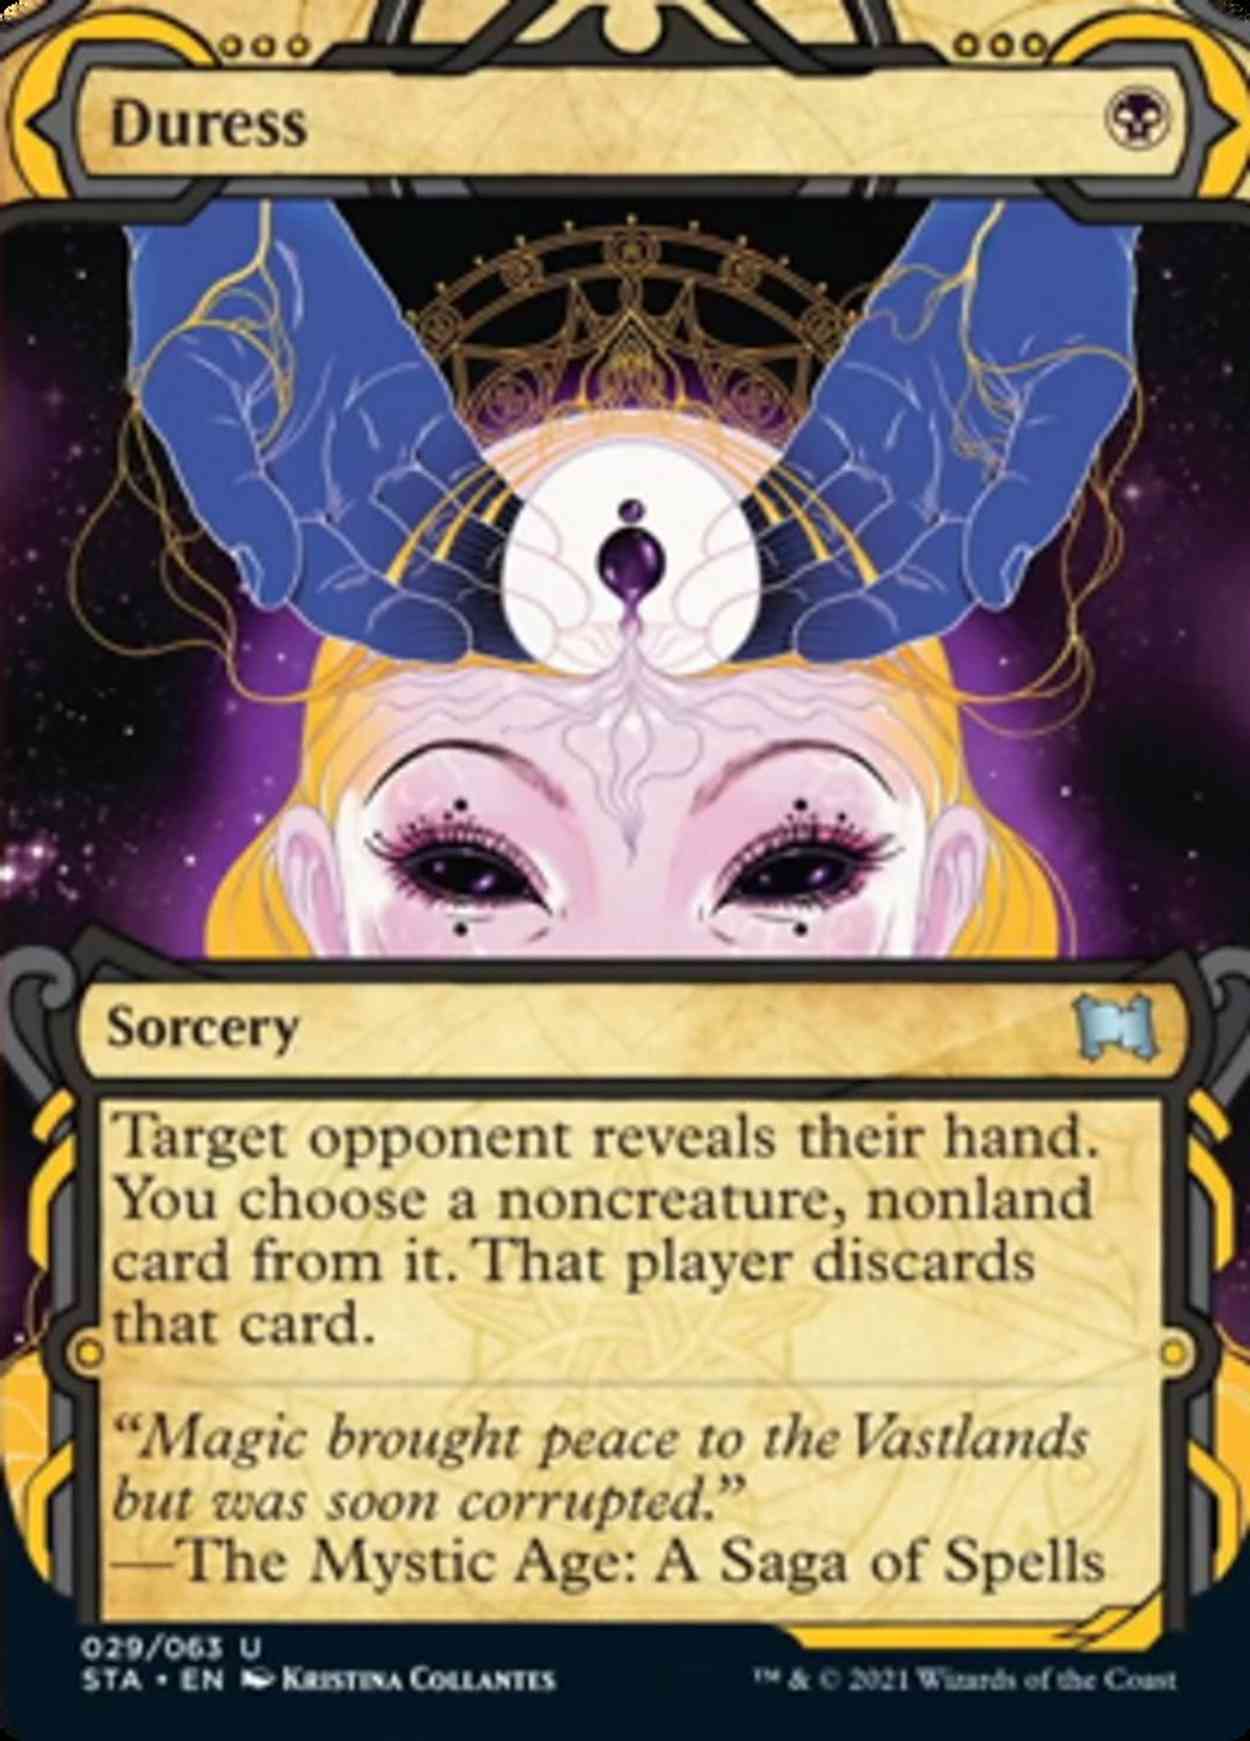 Duress (Foil Etched) magic card front